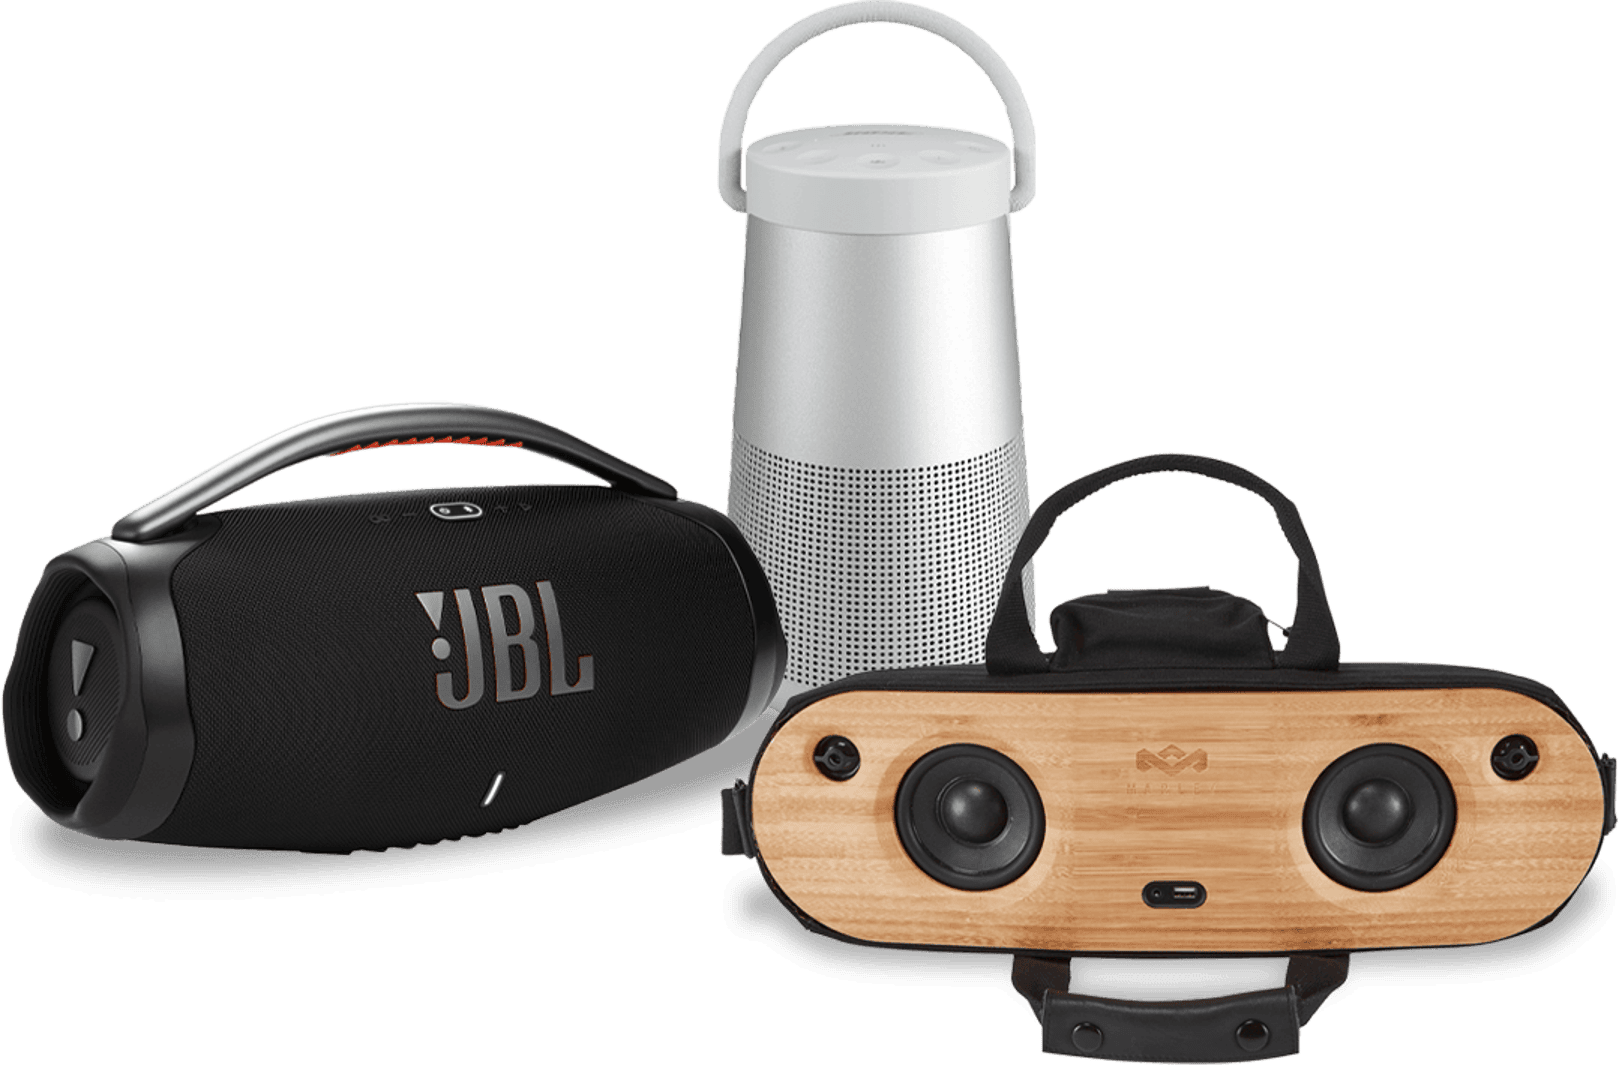 Portable Bluetooth Speaker: Waterproof, Wireless & more